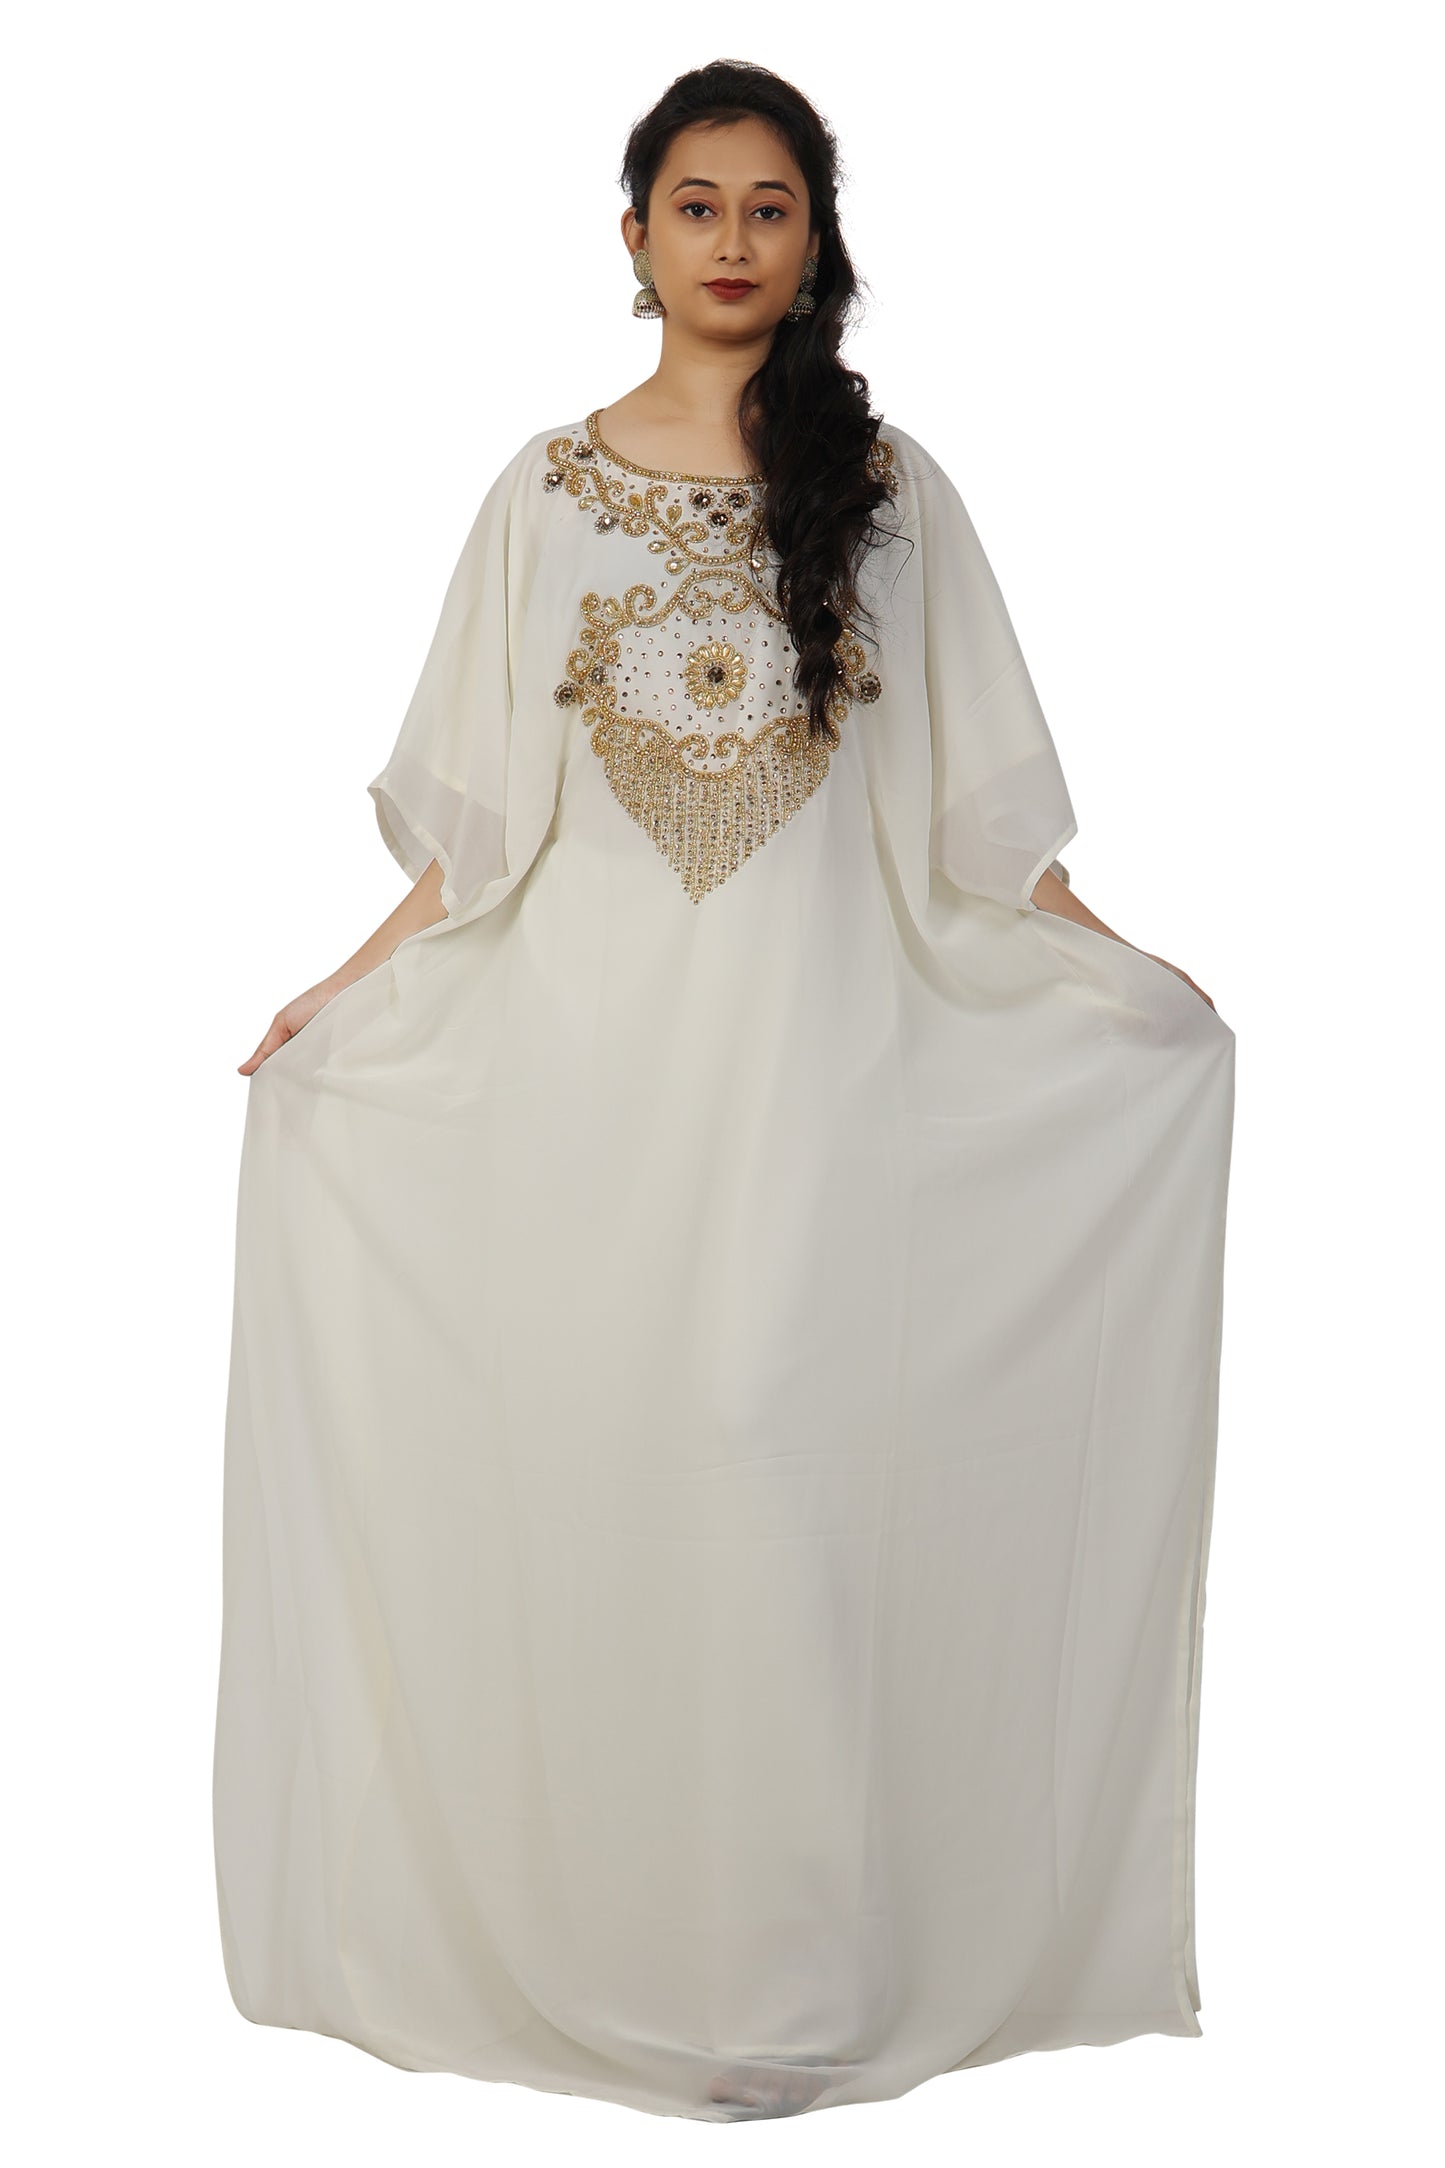 Saudi designer Honayda Serafi talks symbolism in Rajwa Al-Saif's henna gown  ahead of Jordan's royal wedding | Arab News